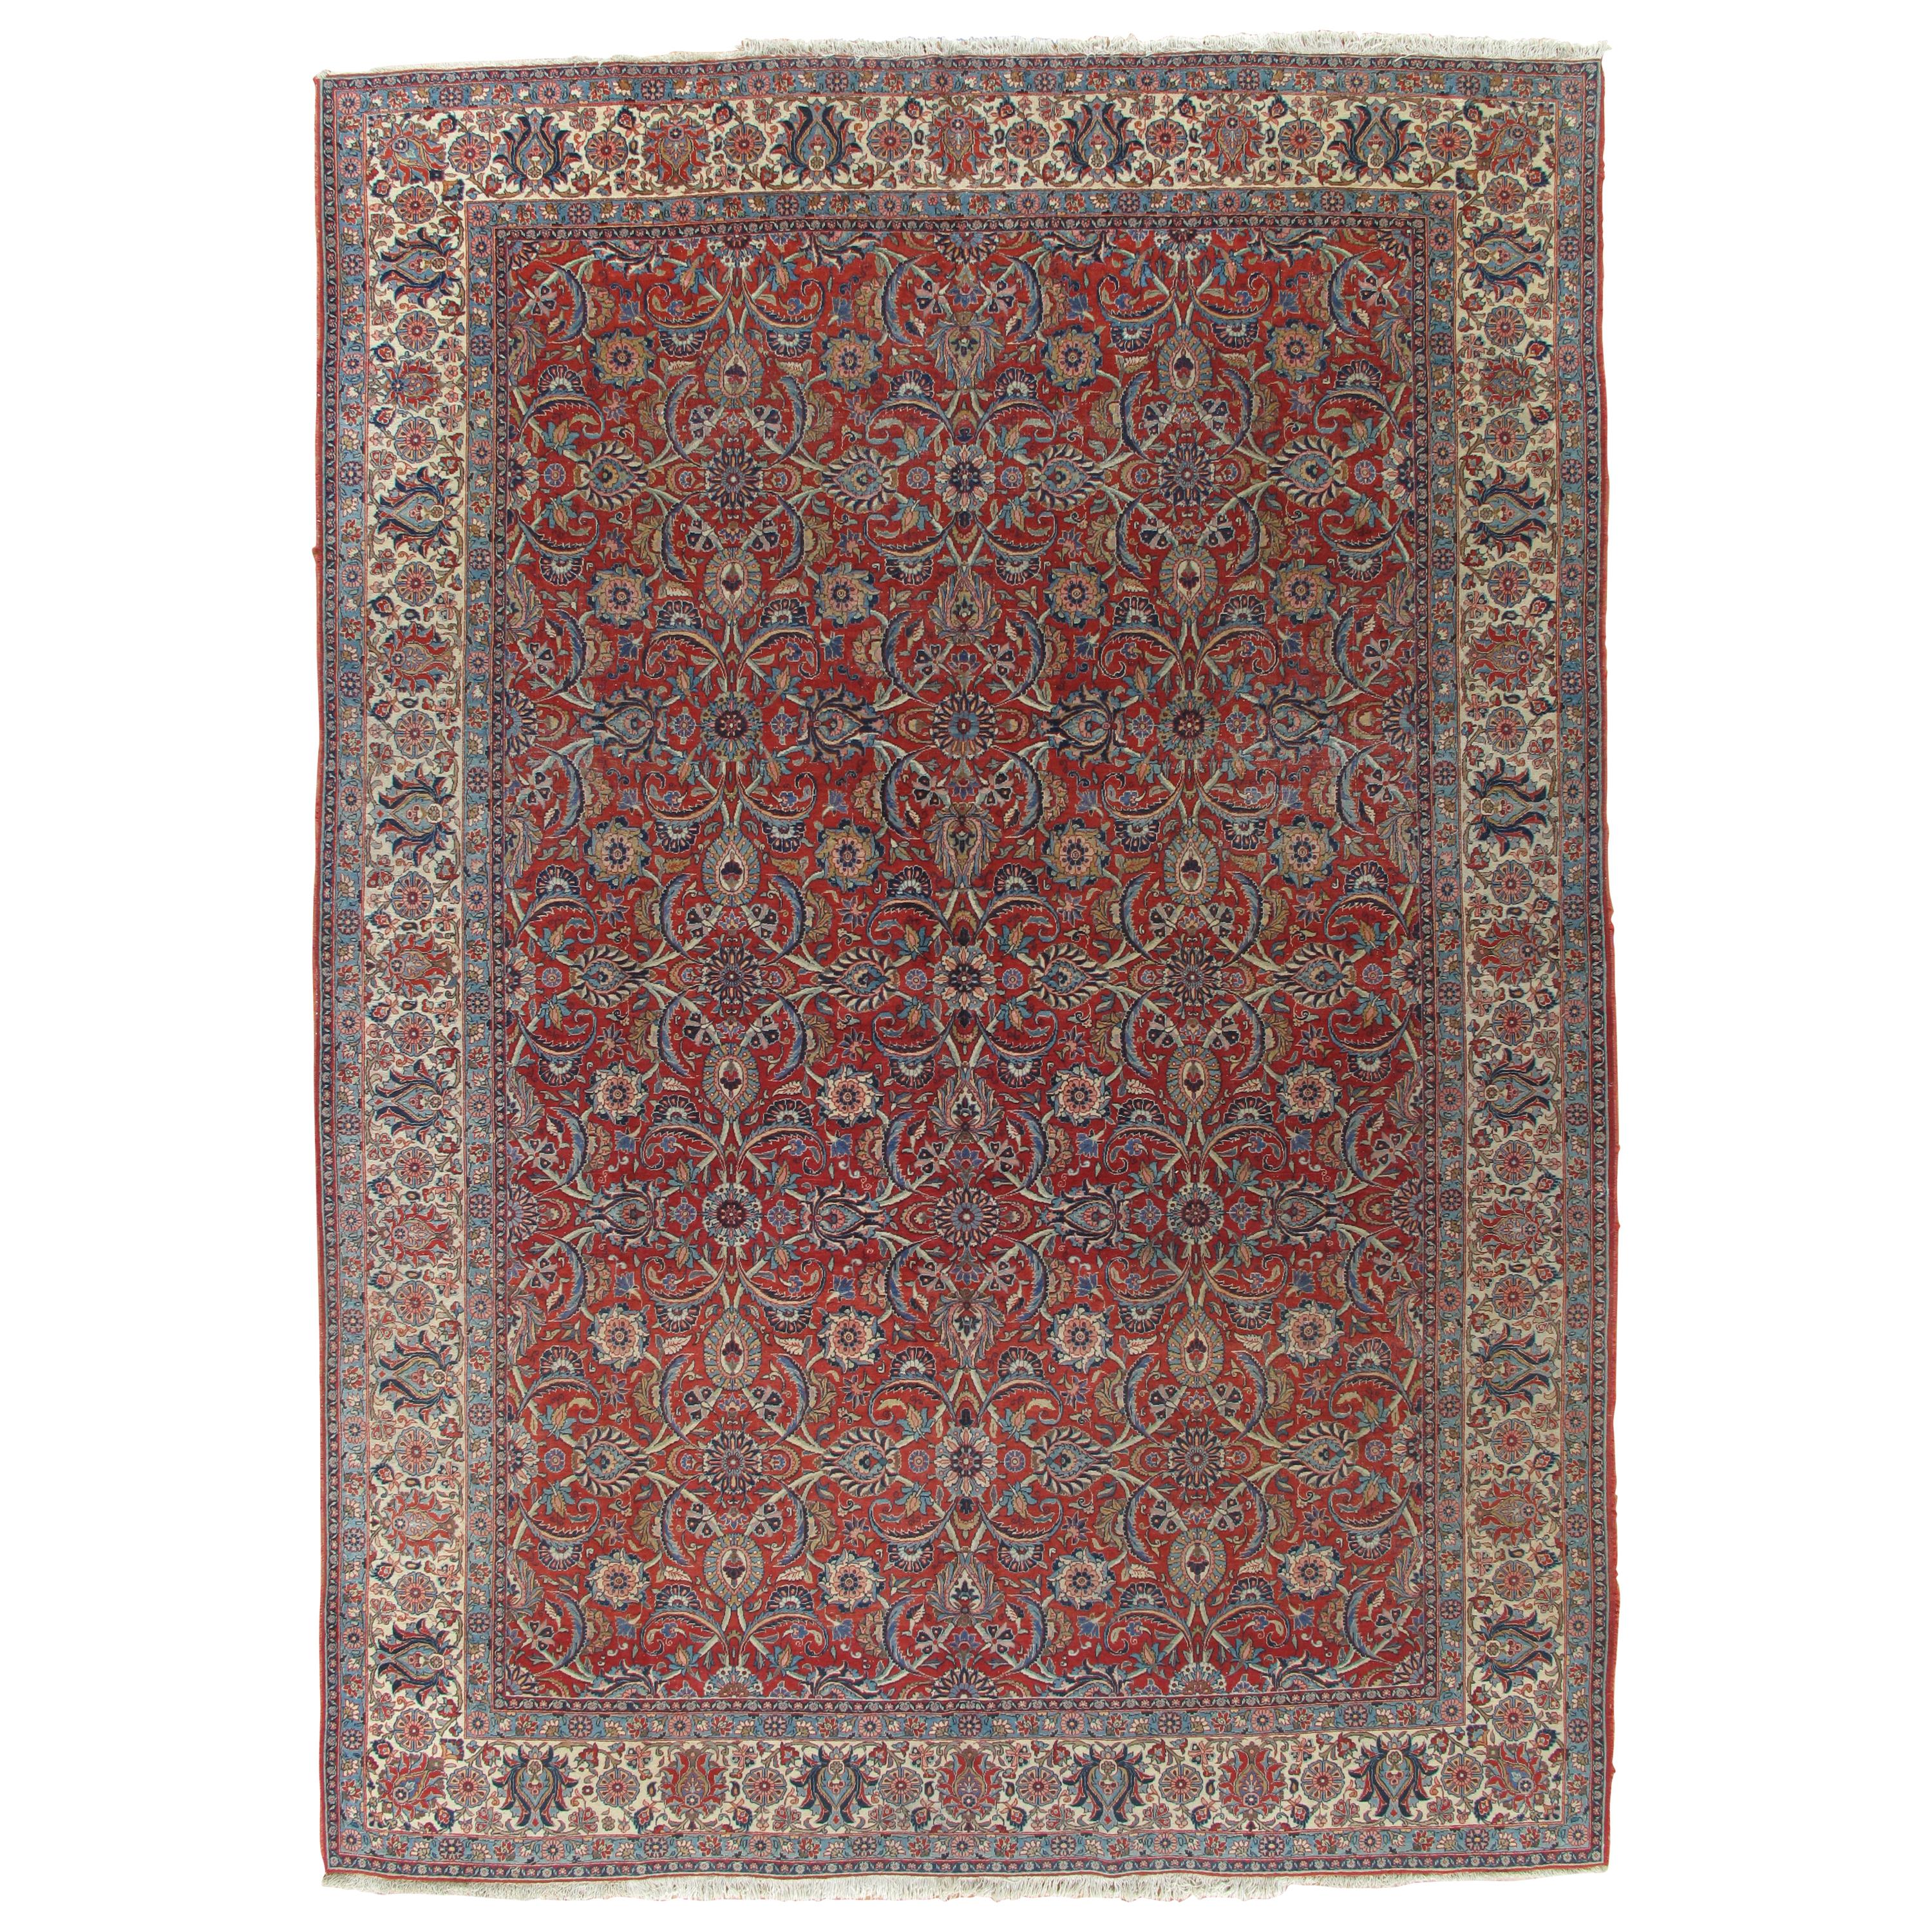 Antique Dabir Kashan Carpet, Handmade Wool Carpet, Red, Navy, Ivory For Sale